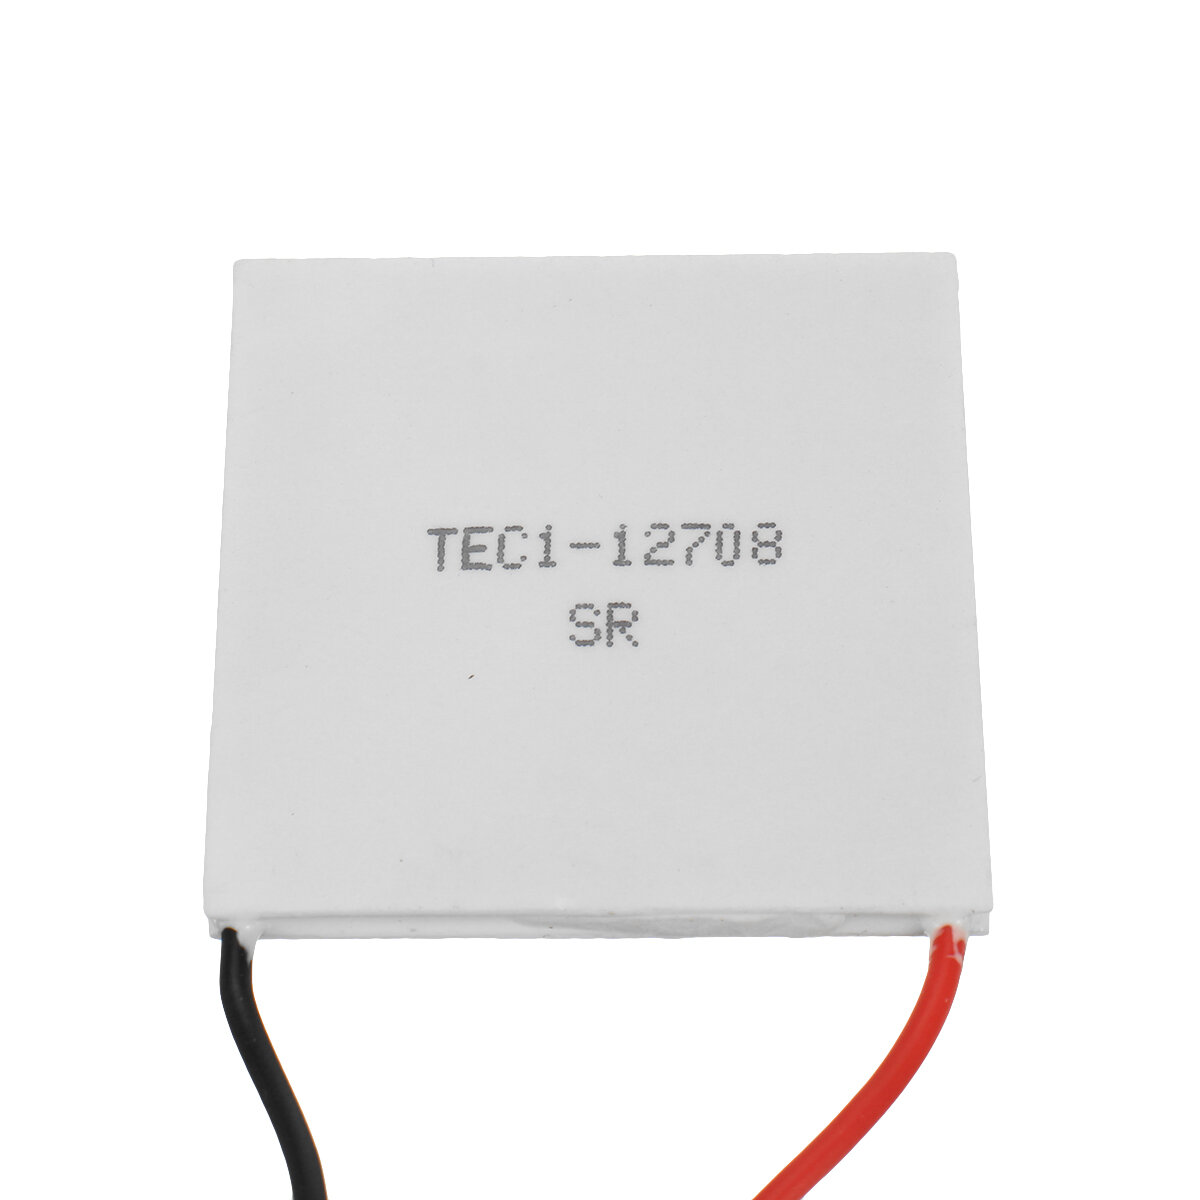 TEC1-12708 12V Heatsink Koeling Peltier TEC Halfgeleider Thermo-elektrische Koeler 40mm * 40mm * 3.6